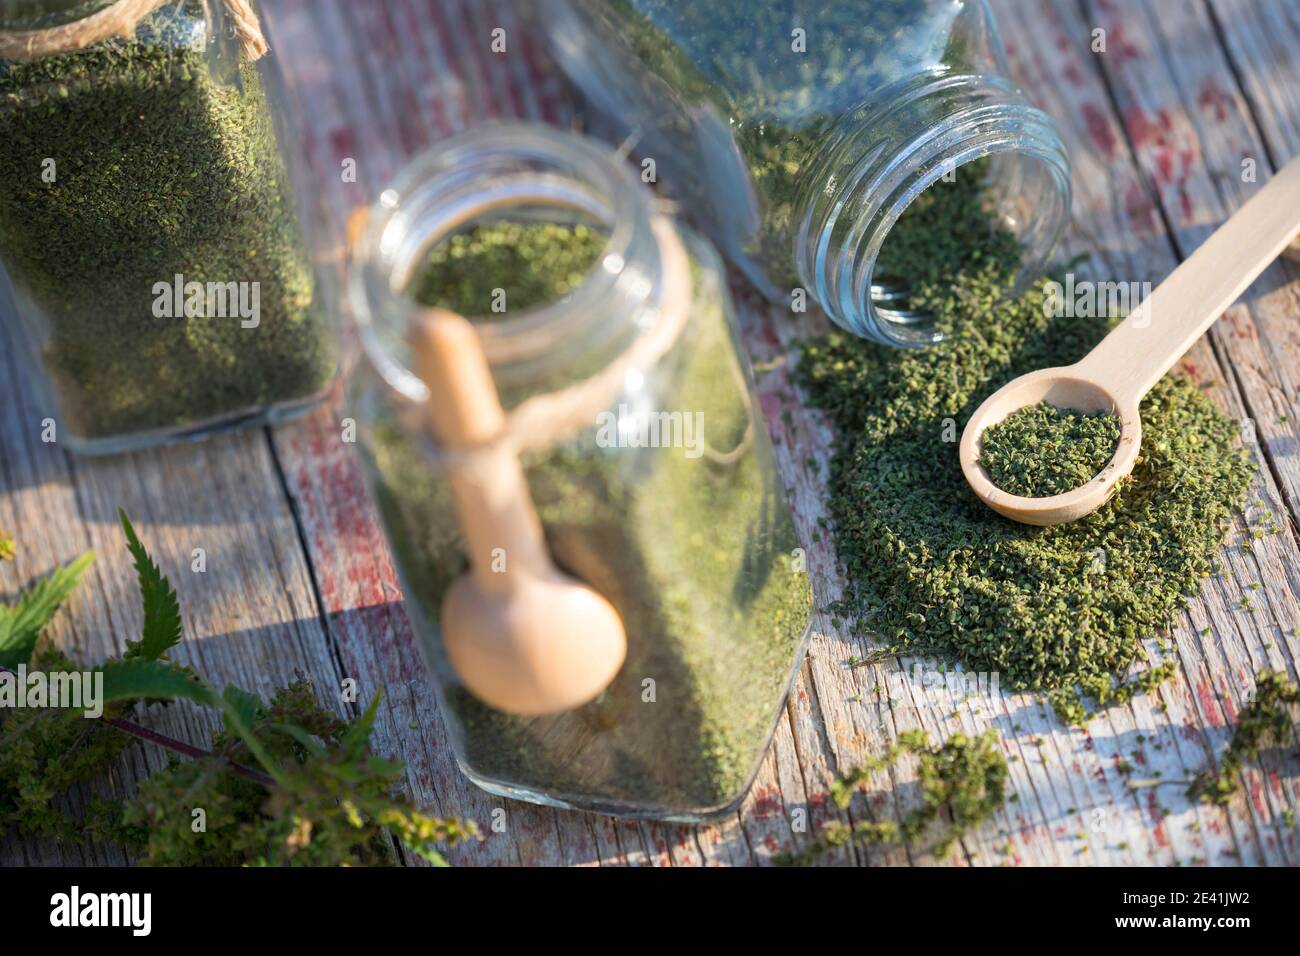 Ortica (Urtica dioica), semi di ortica essiccati in contenitori di vetro con cucchiai di legno, Germania Foto Stock